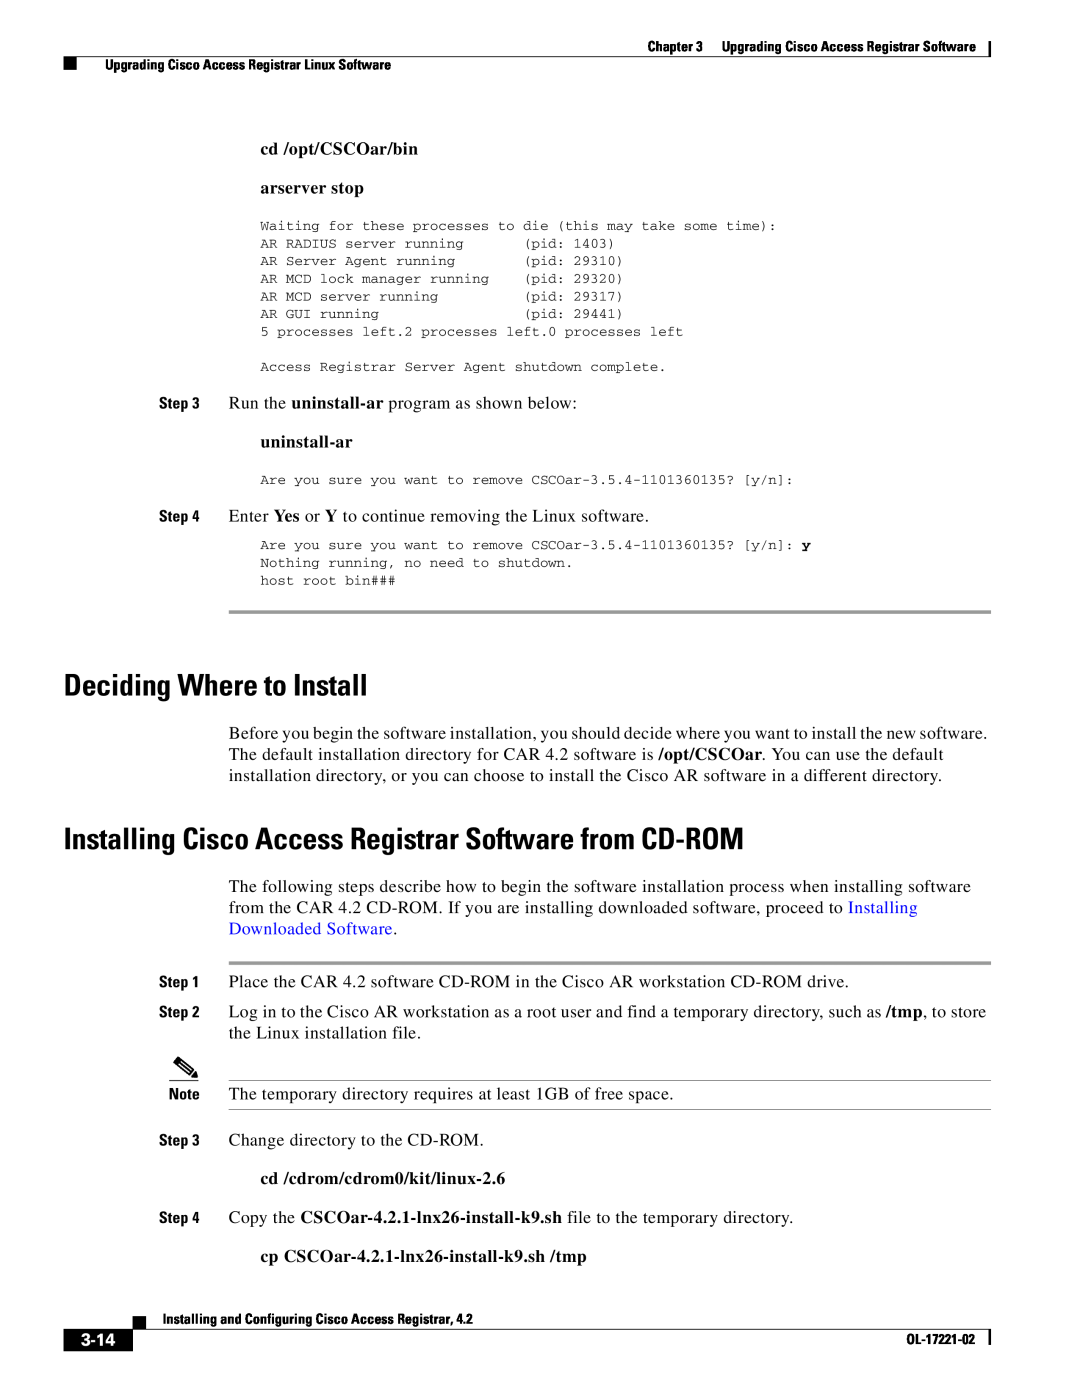 Cisco Systems 4.2 manual cd /opt/CSCOar/bin arserver stop, uninstall-ar, cd /cdrom/cdrom0/kit/linux-2.6, 3-14 